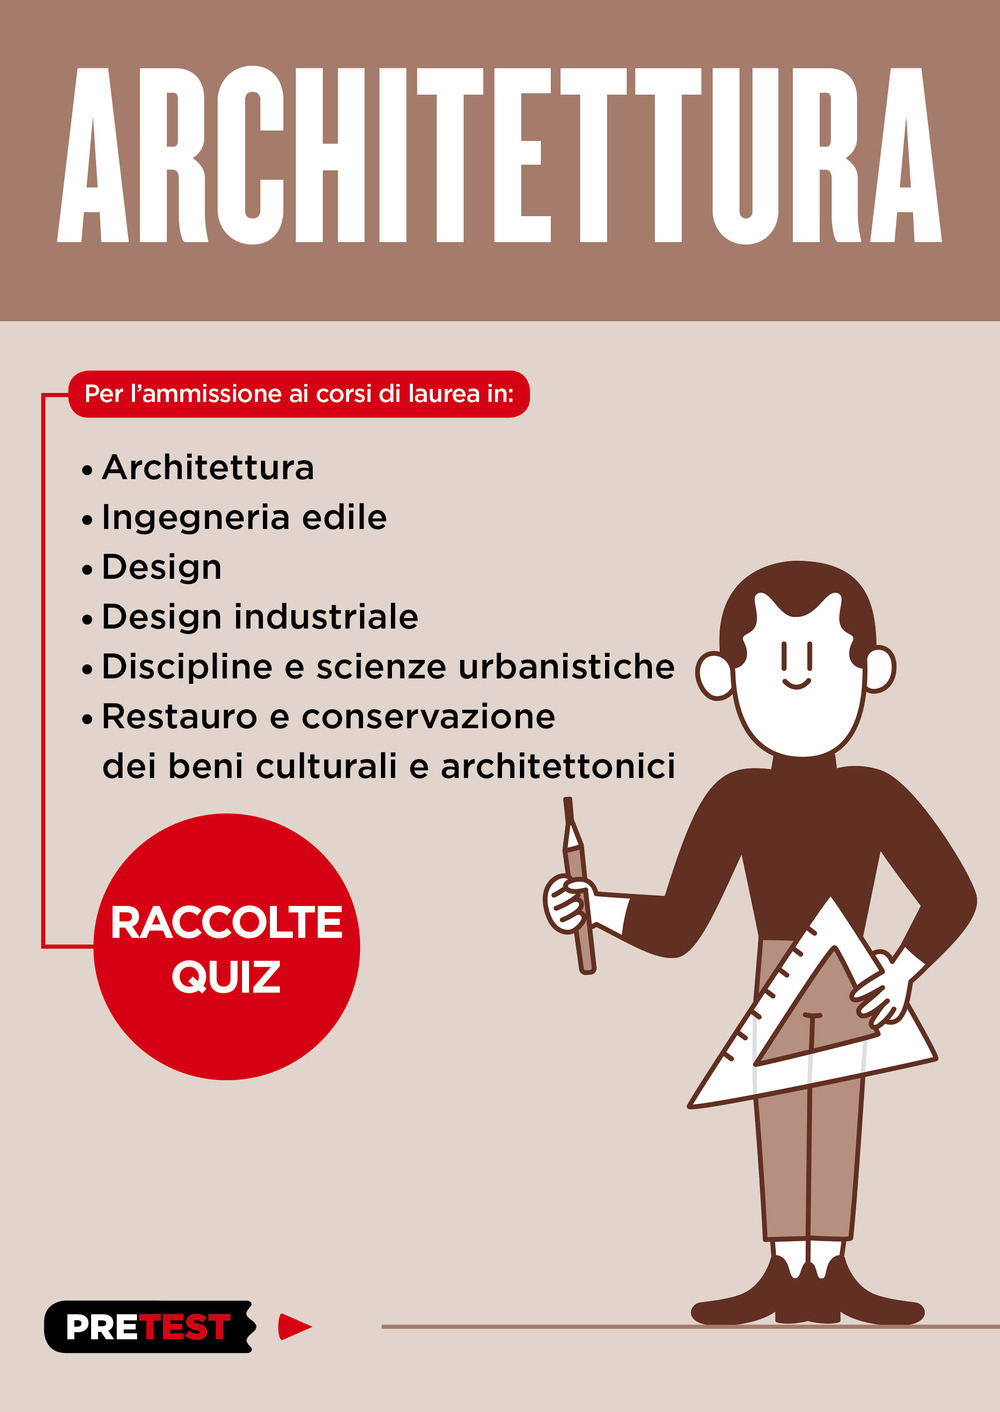 Image of Architettura. Raccolte quiz